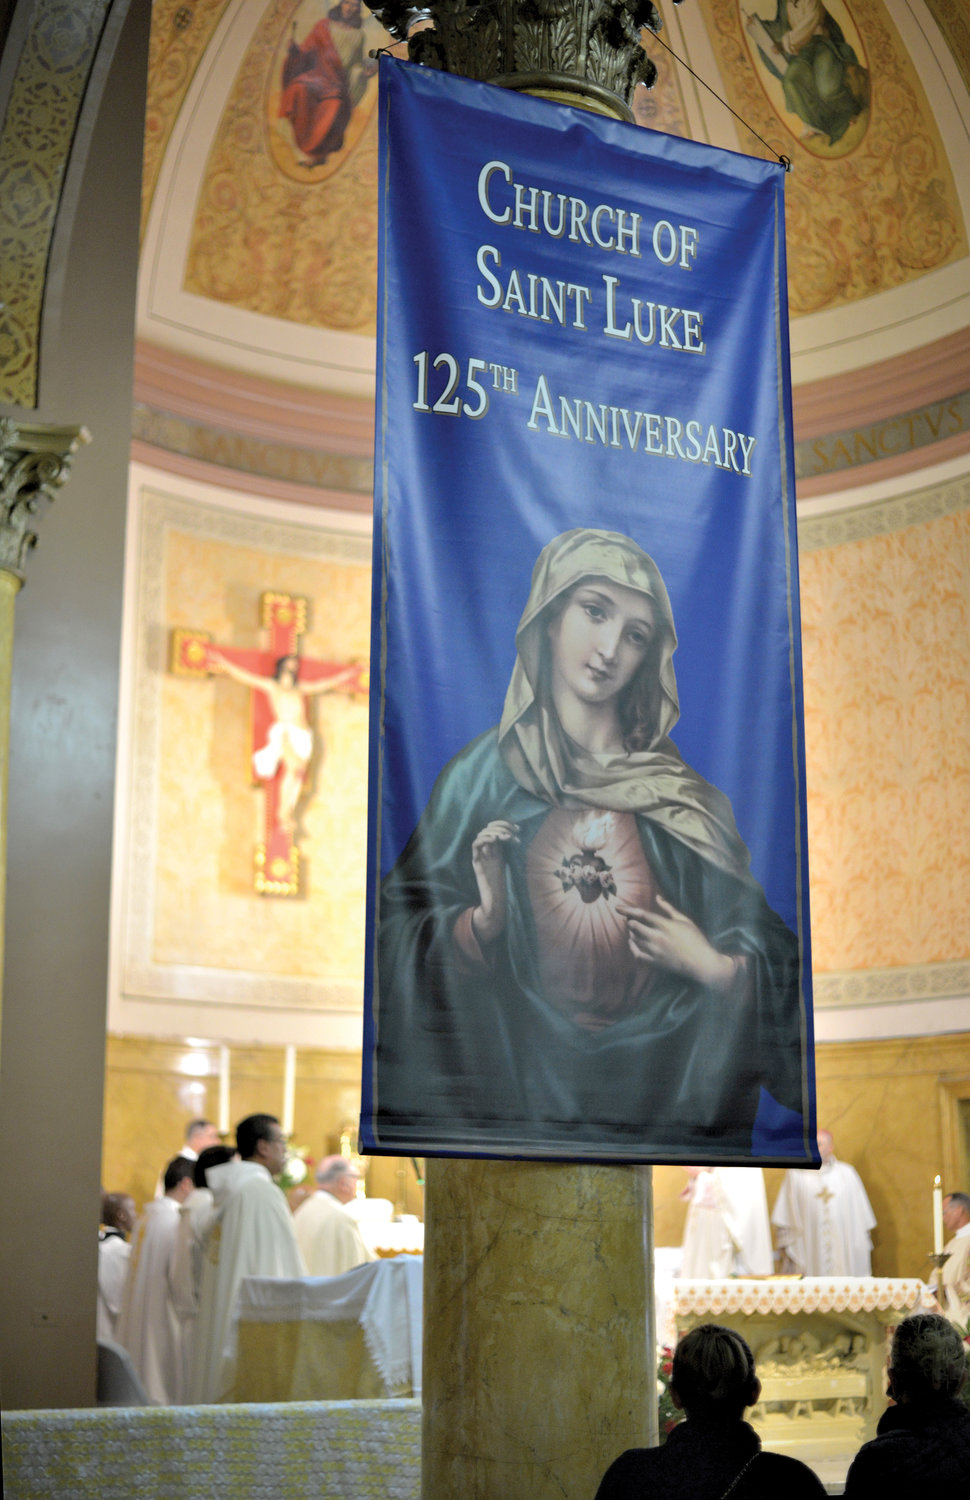 A celebration banner hangs high inside the church.